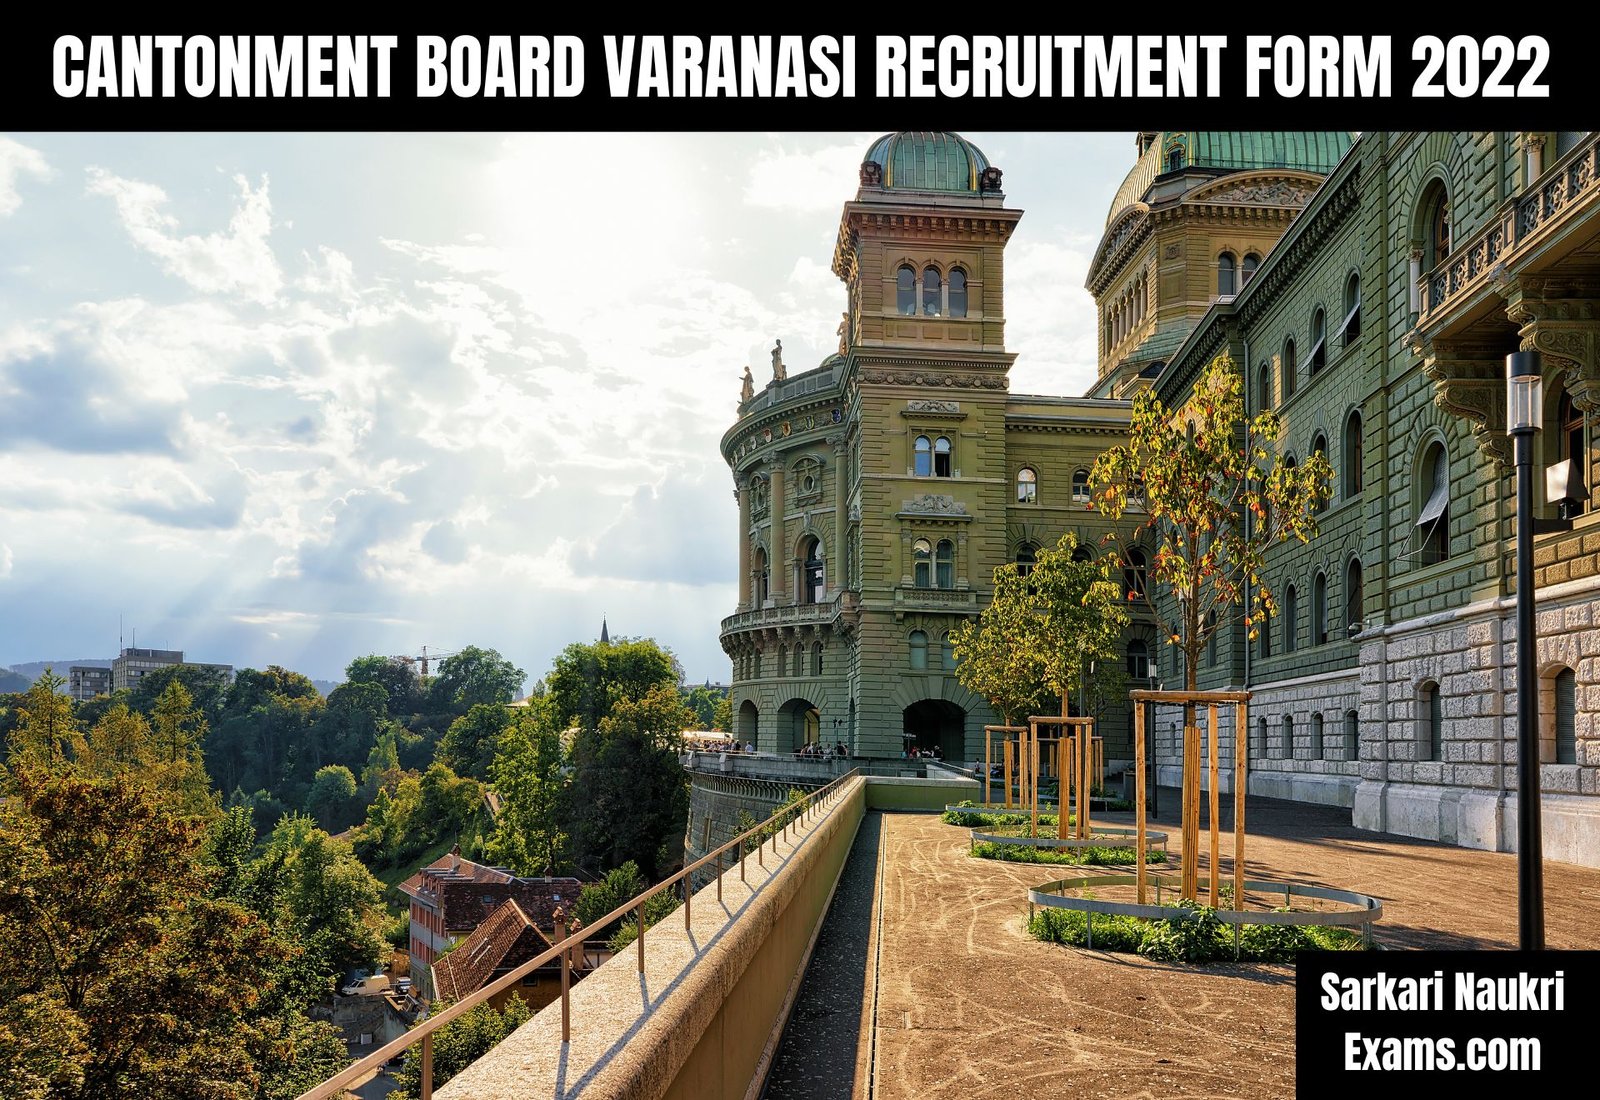 Cantonment Board Varanasi Recruitment Form 2022 | Salary Up To 177500/-